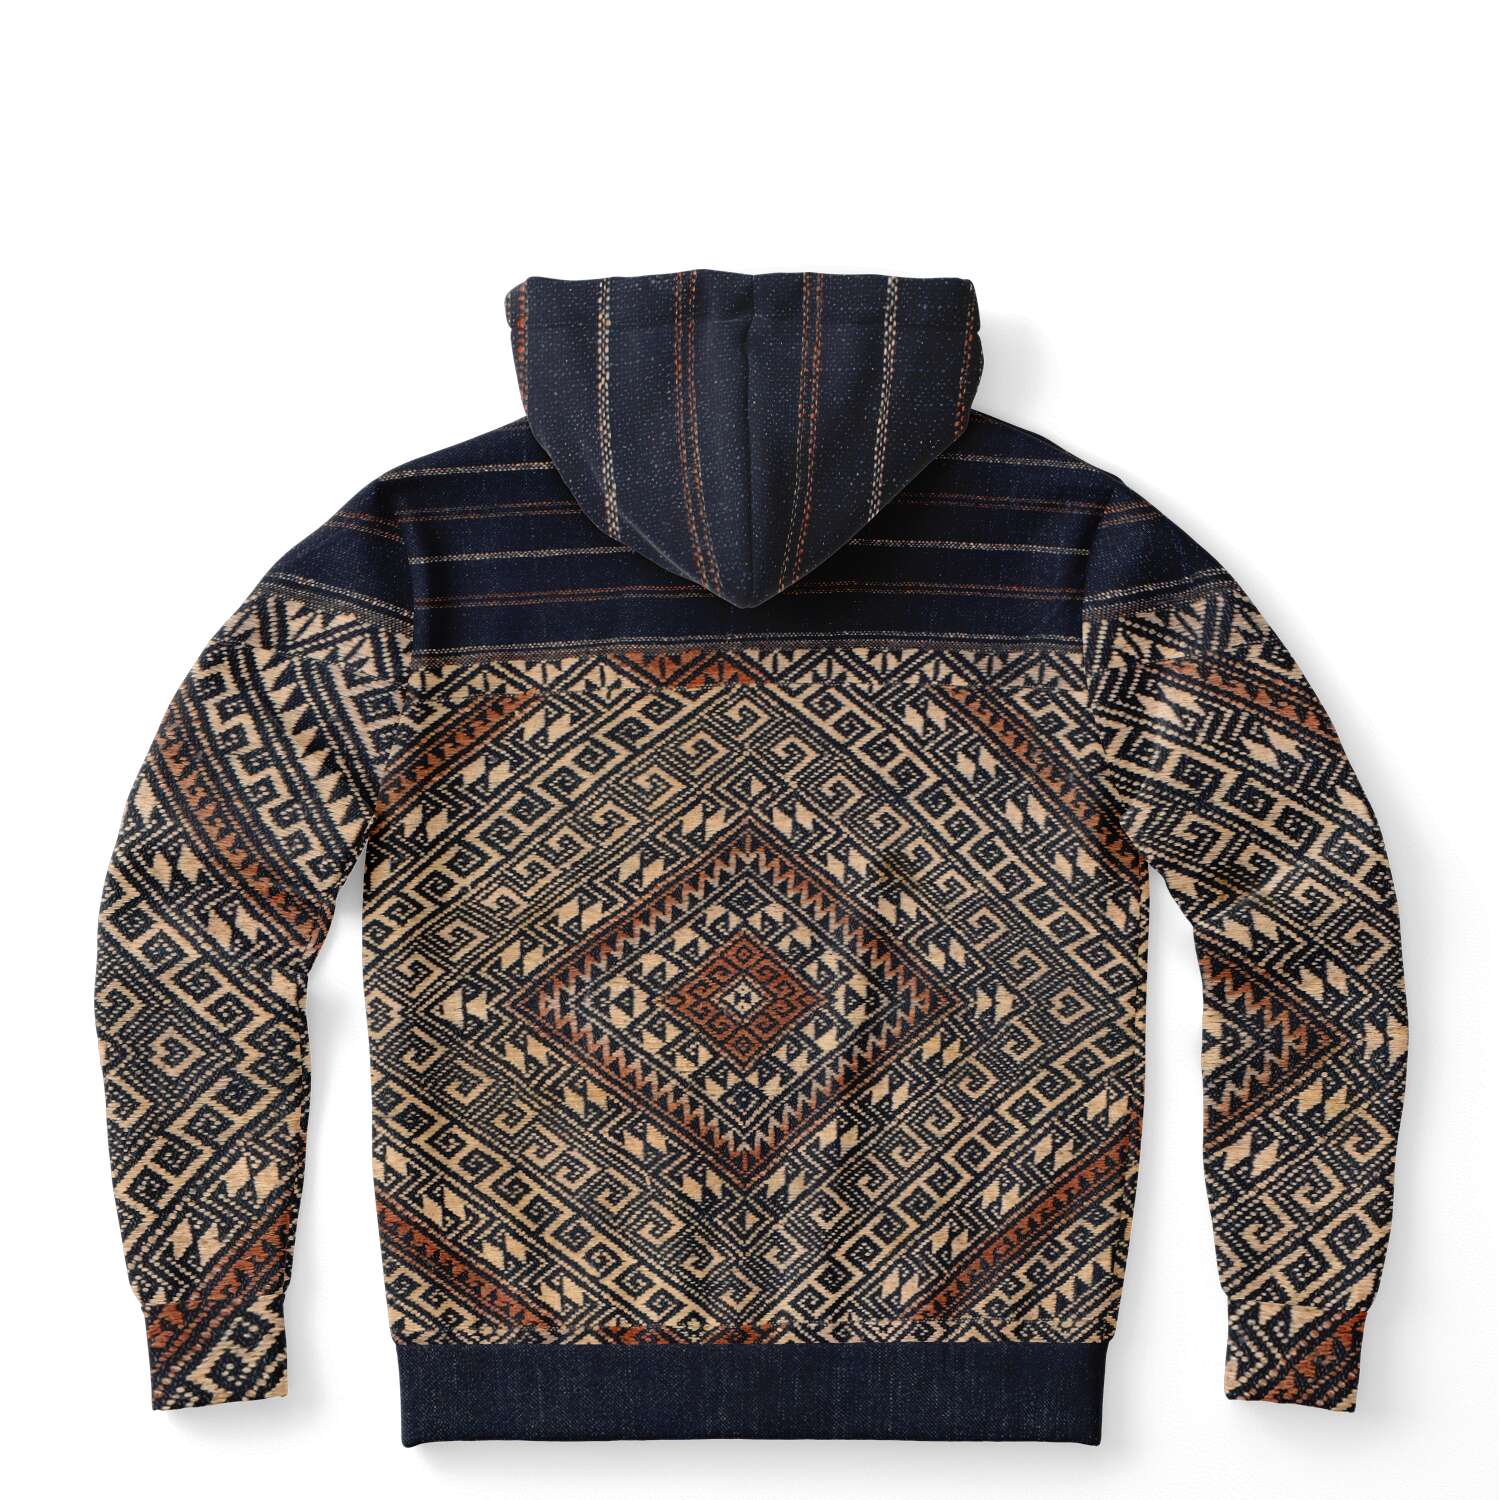 Fashion Hoodie - AOP XS Rare Miao Traditional Textile | SE Asian Batik Ikat Vintage Gift | Boho Kuba, Kilim, Ethnic Shaman Jacket | Pullover Tribal Hoodie